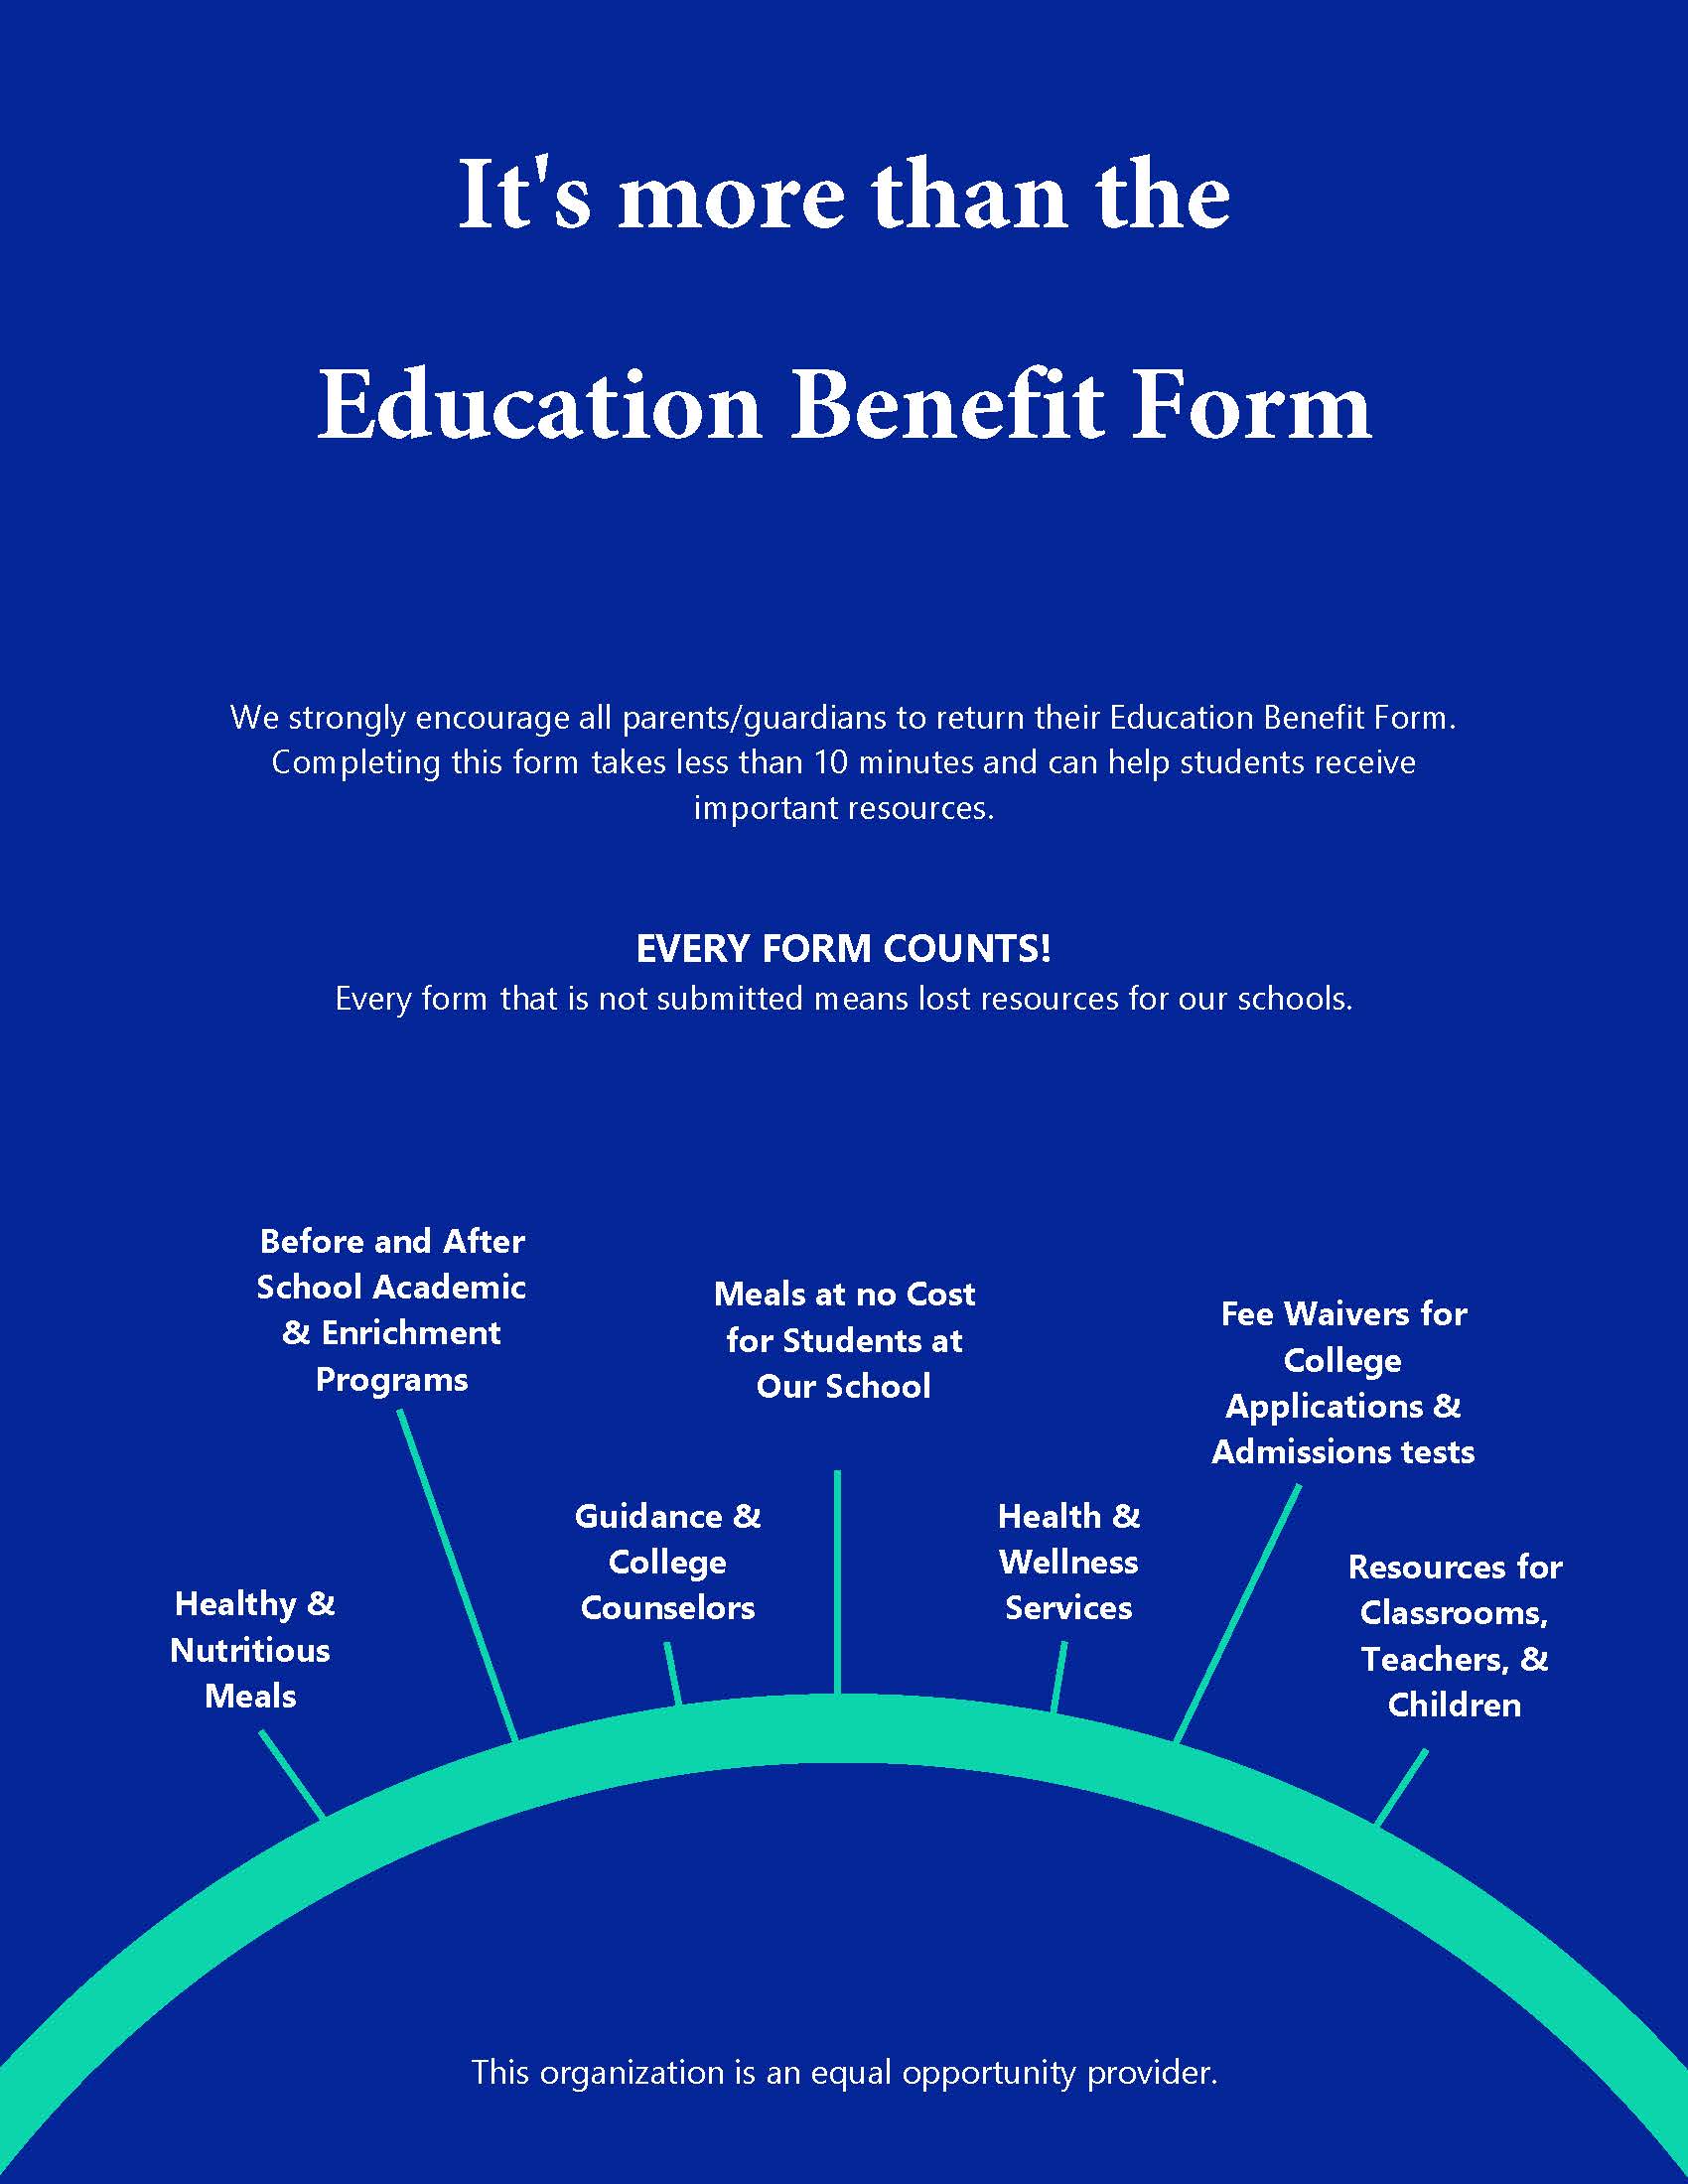 Food_Services_education_benefit_form_flyer.jpg